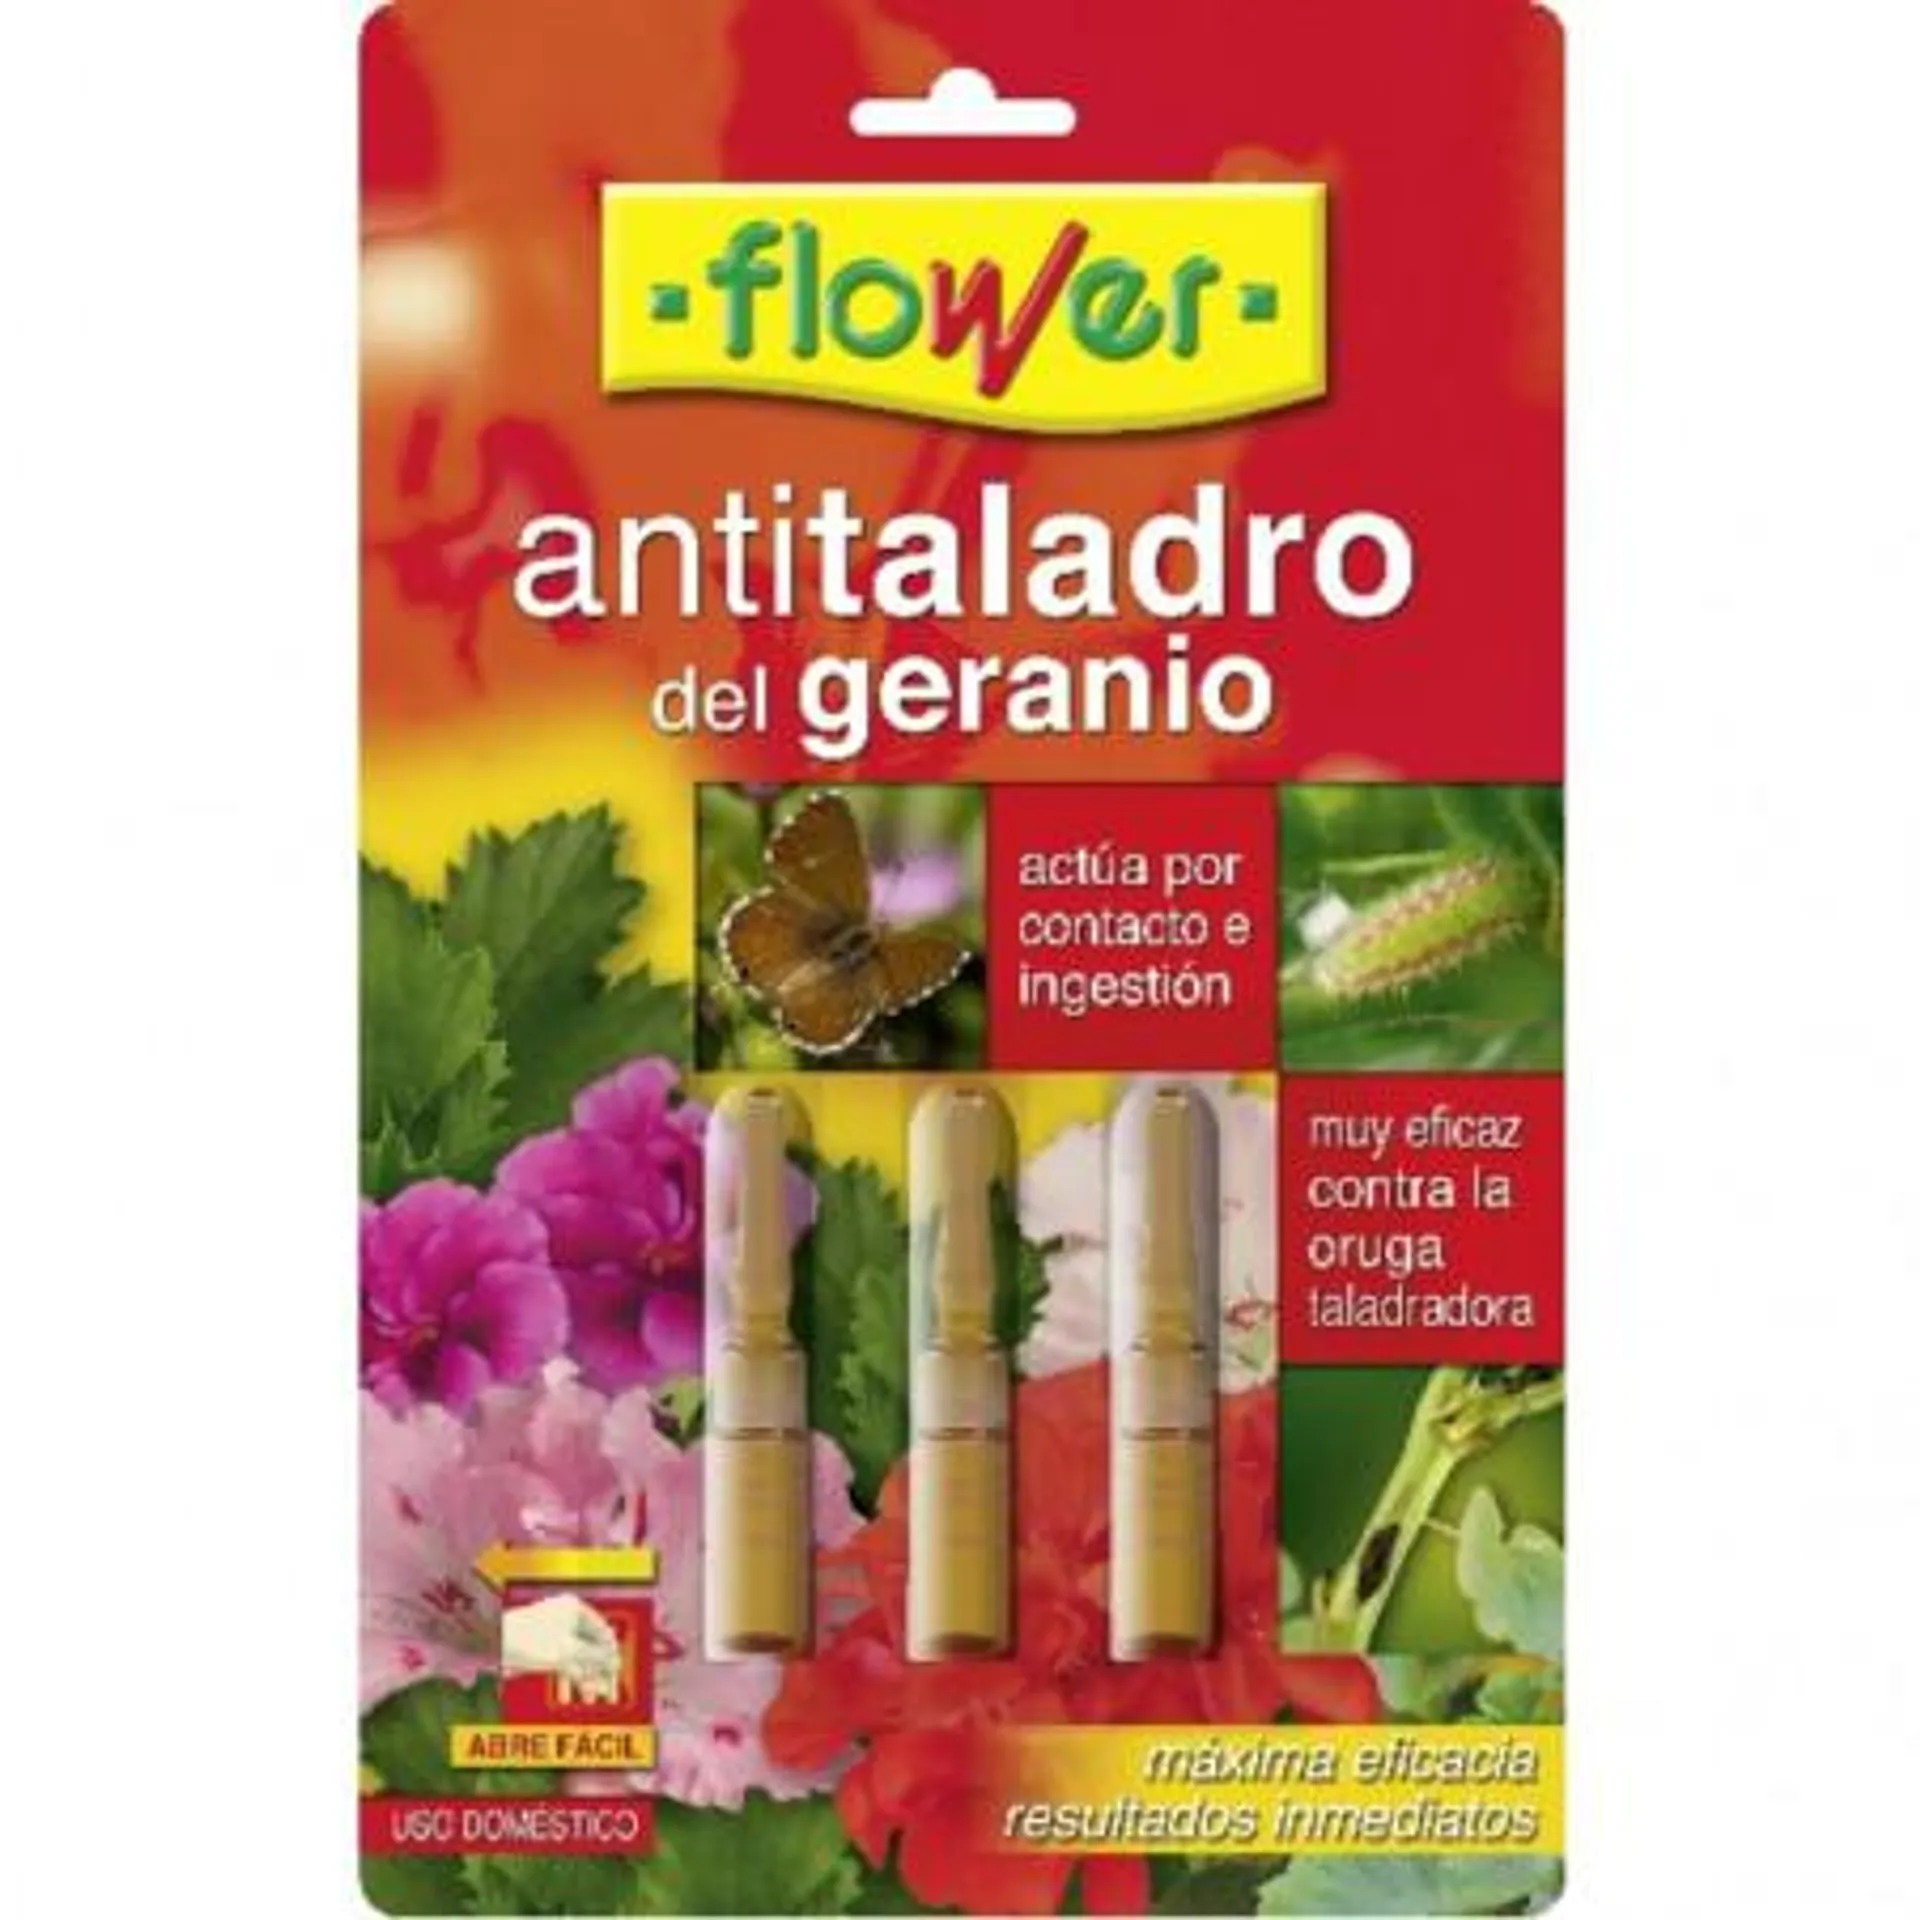 FLOWER ANTITALADRO GERANIOS INSECTICIDA 3 X 3ML